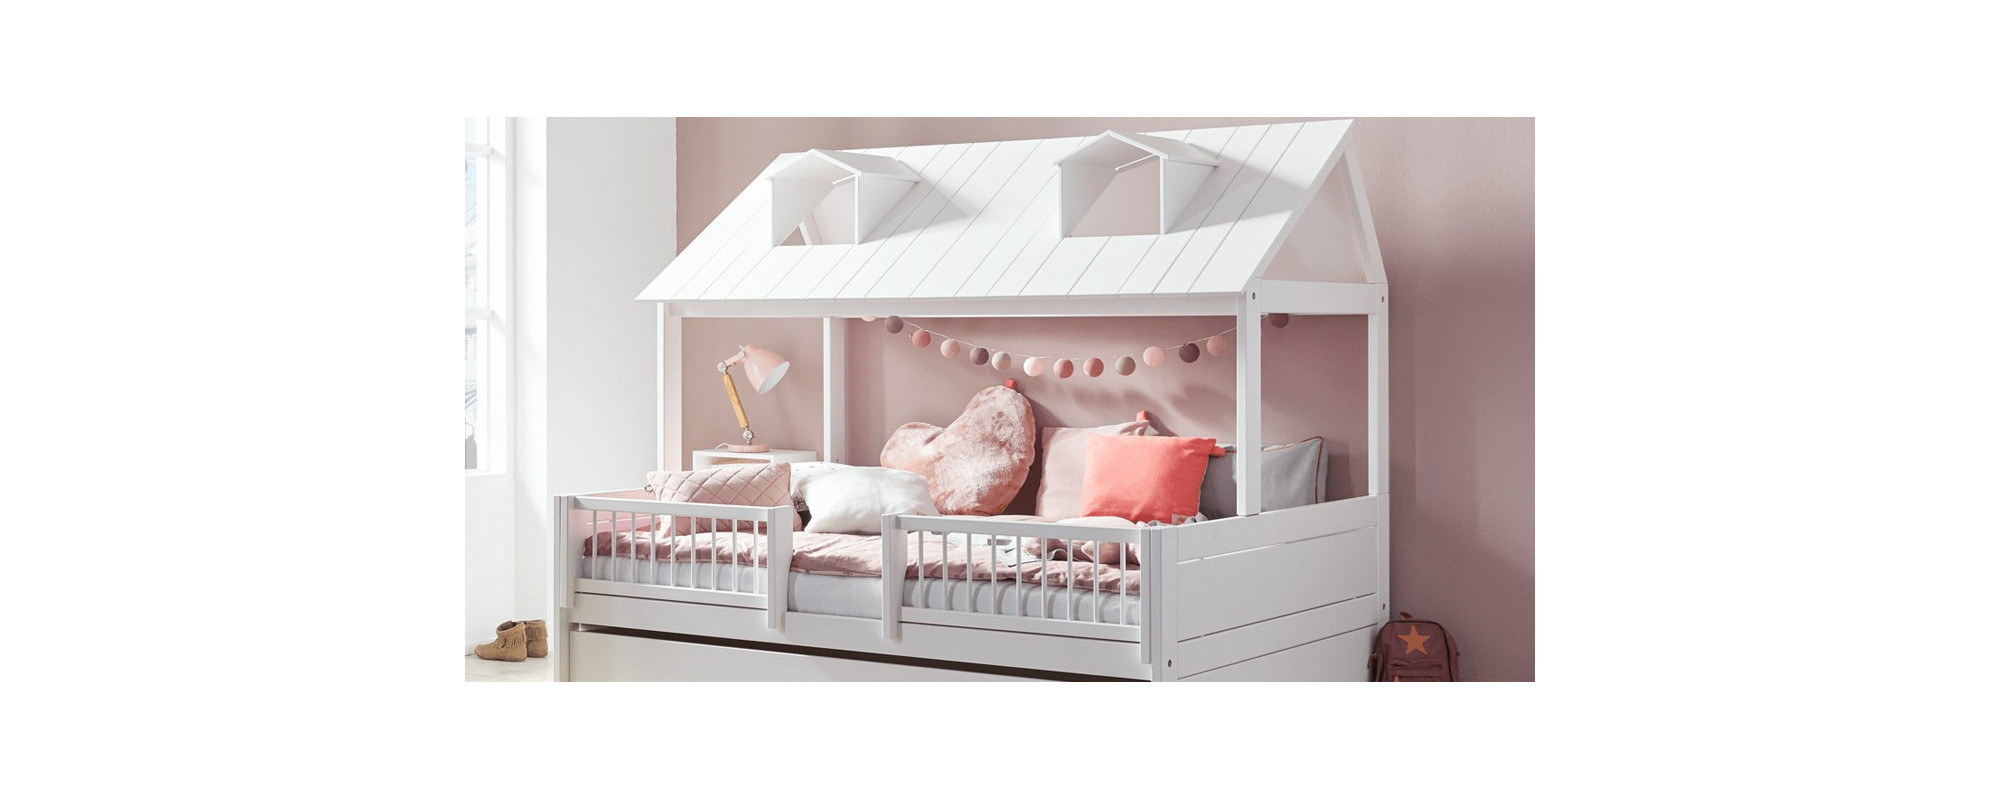 Life-Time  BEACH-HOUSE – die Schlafperle in jedem Kinderzimmer!